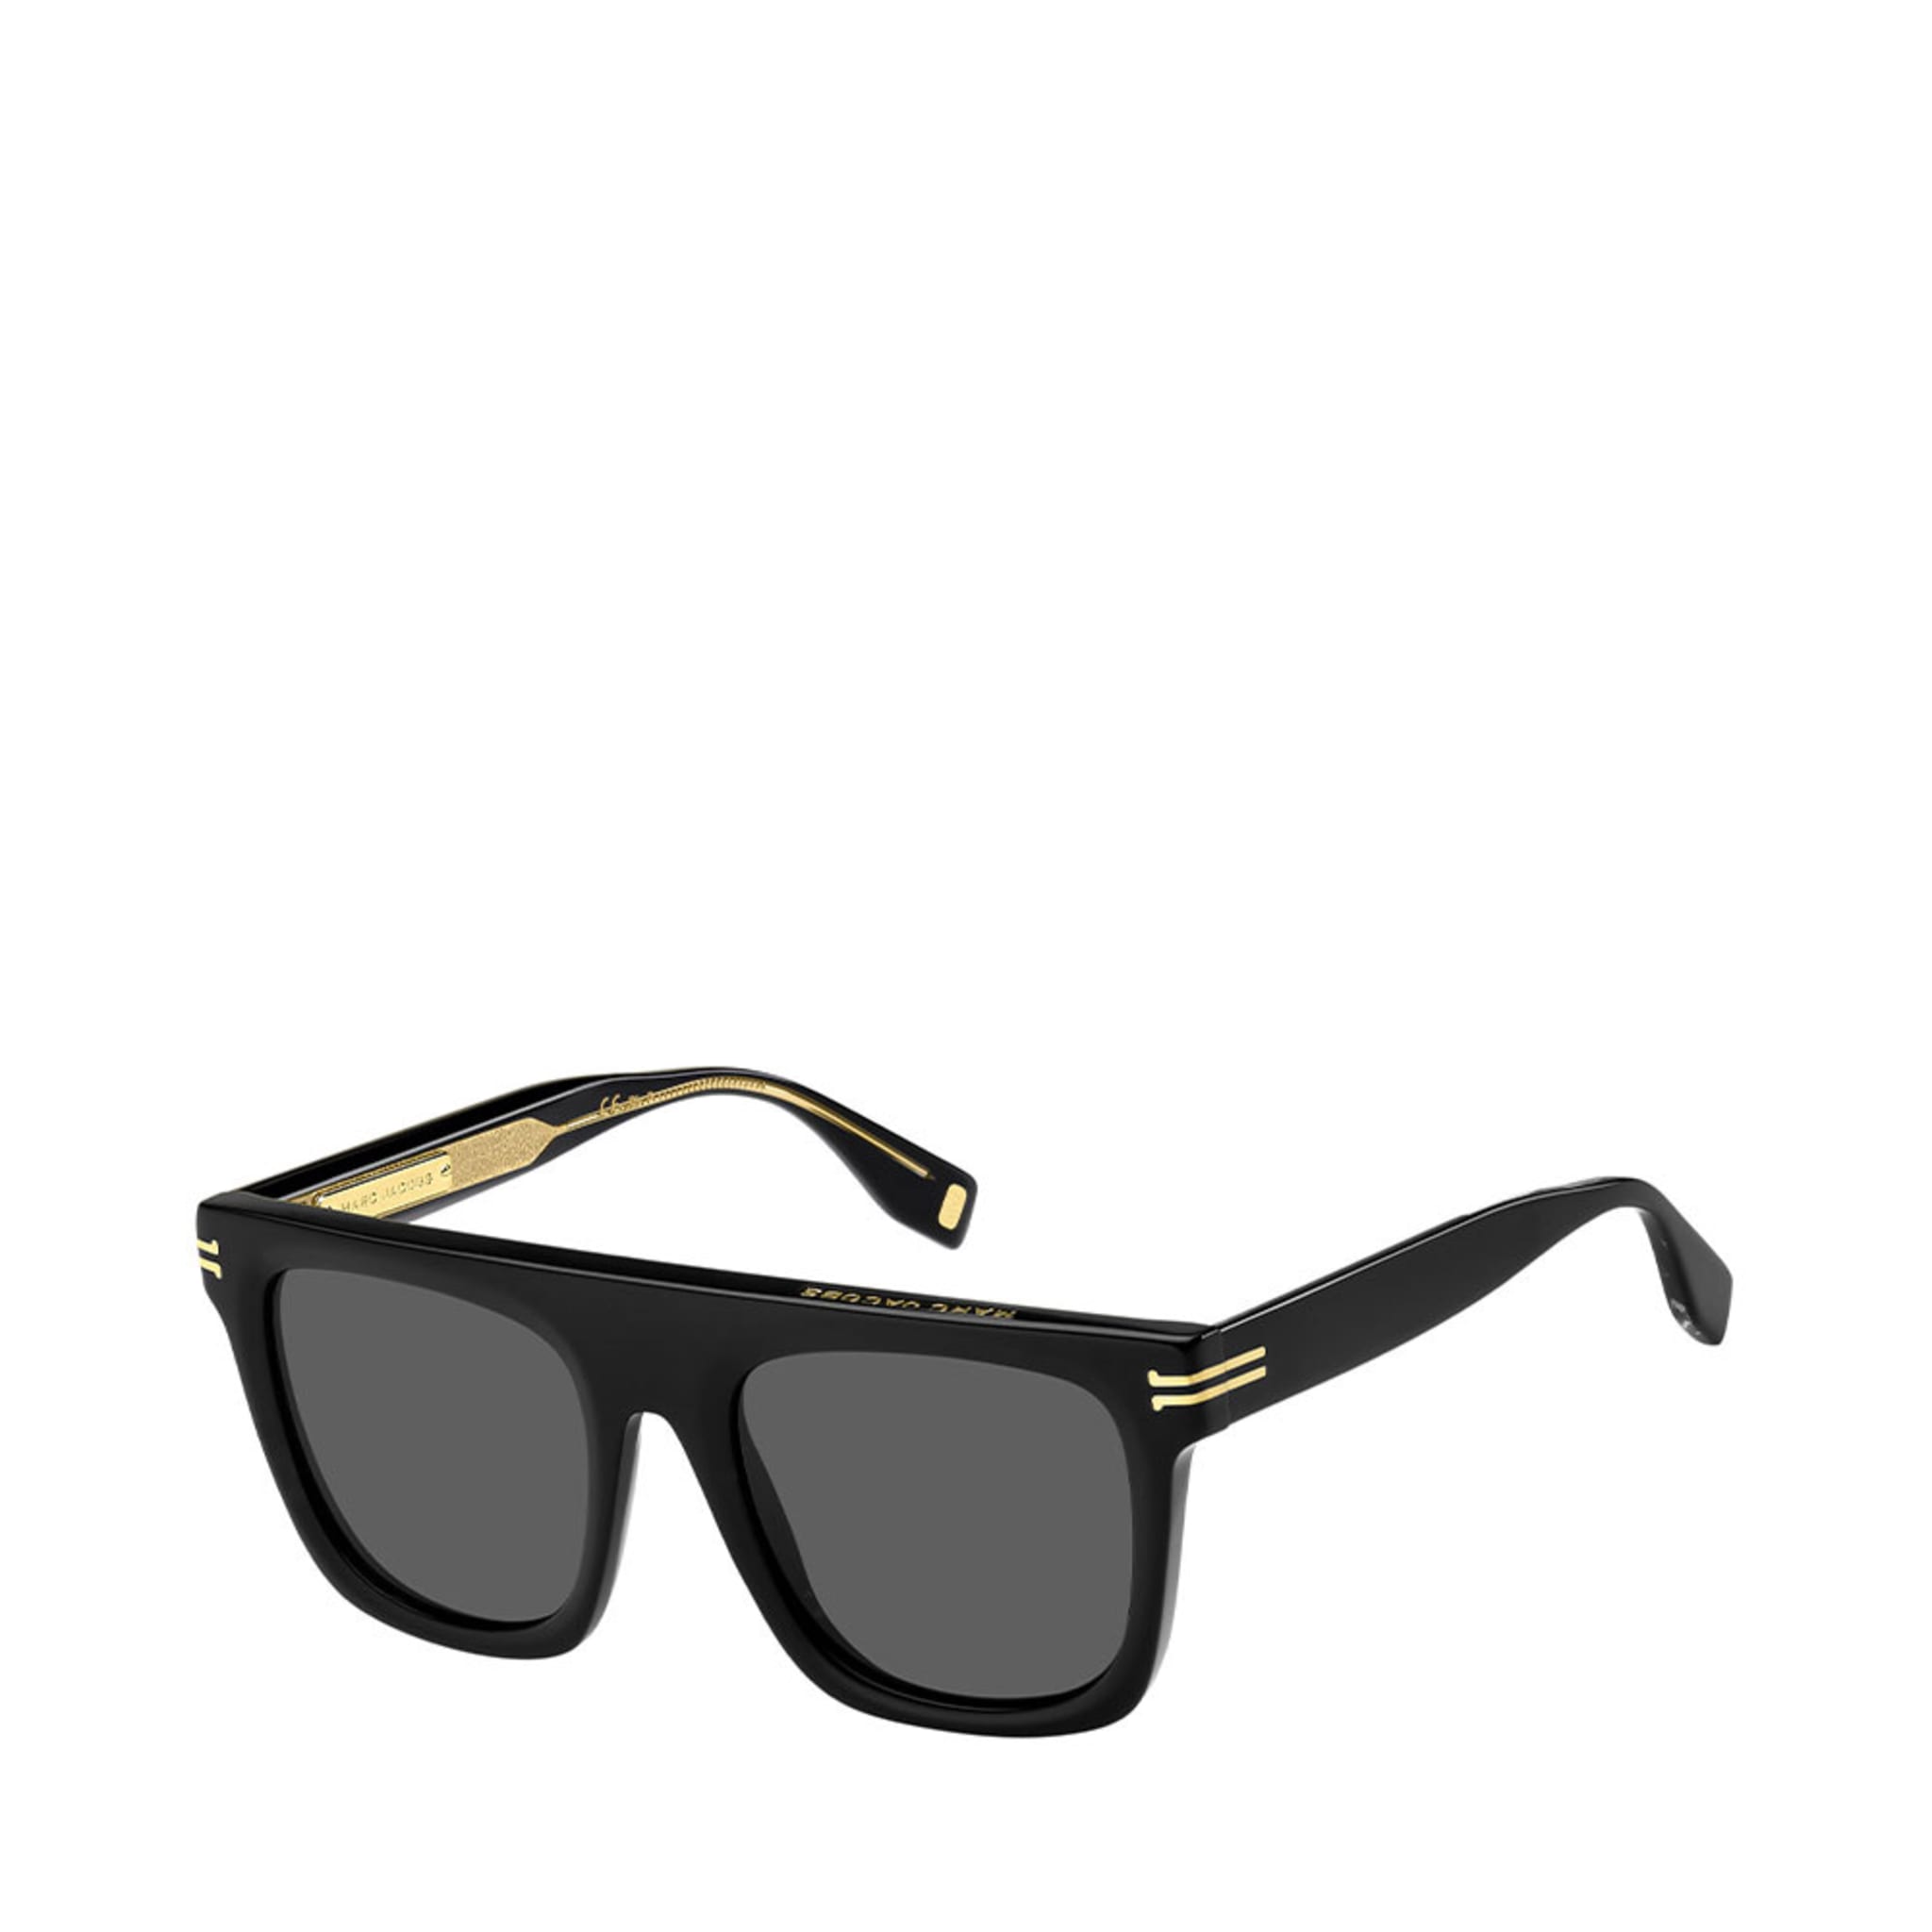 Sunglasses 1044, Black